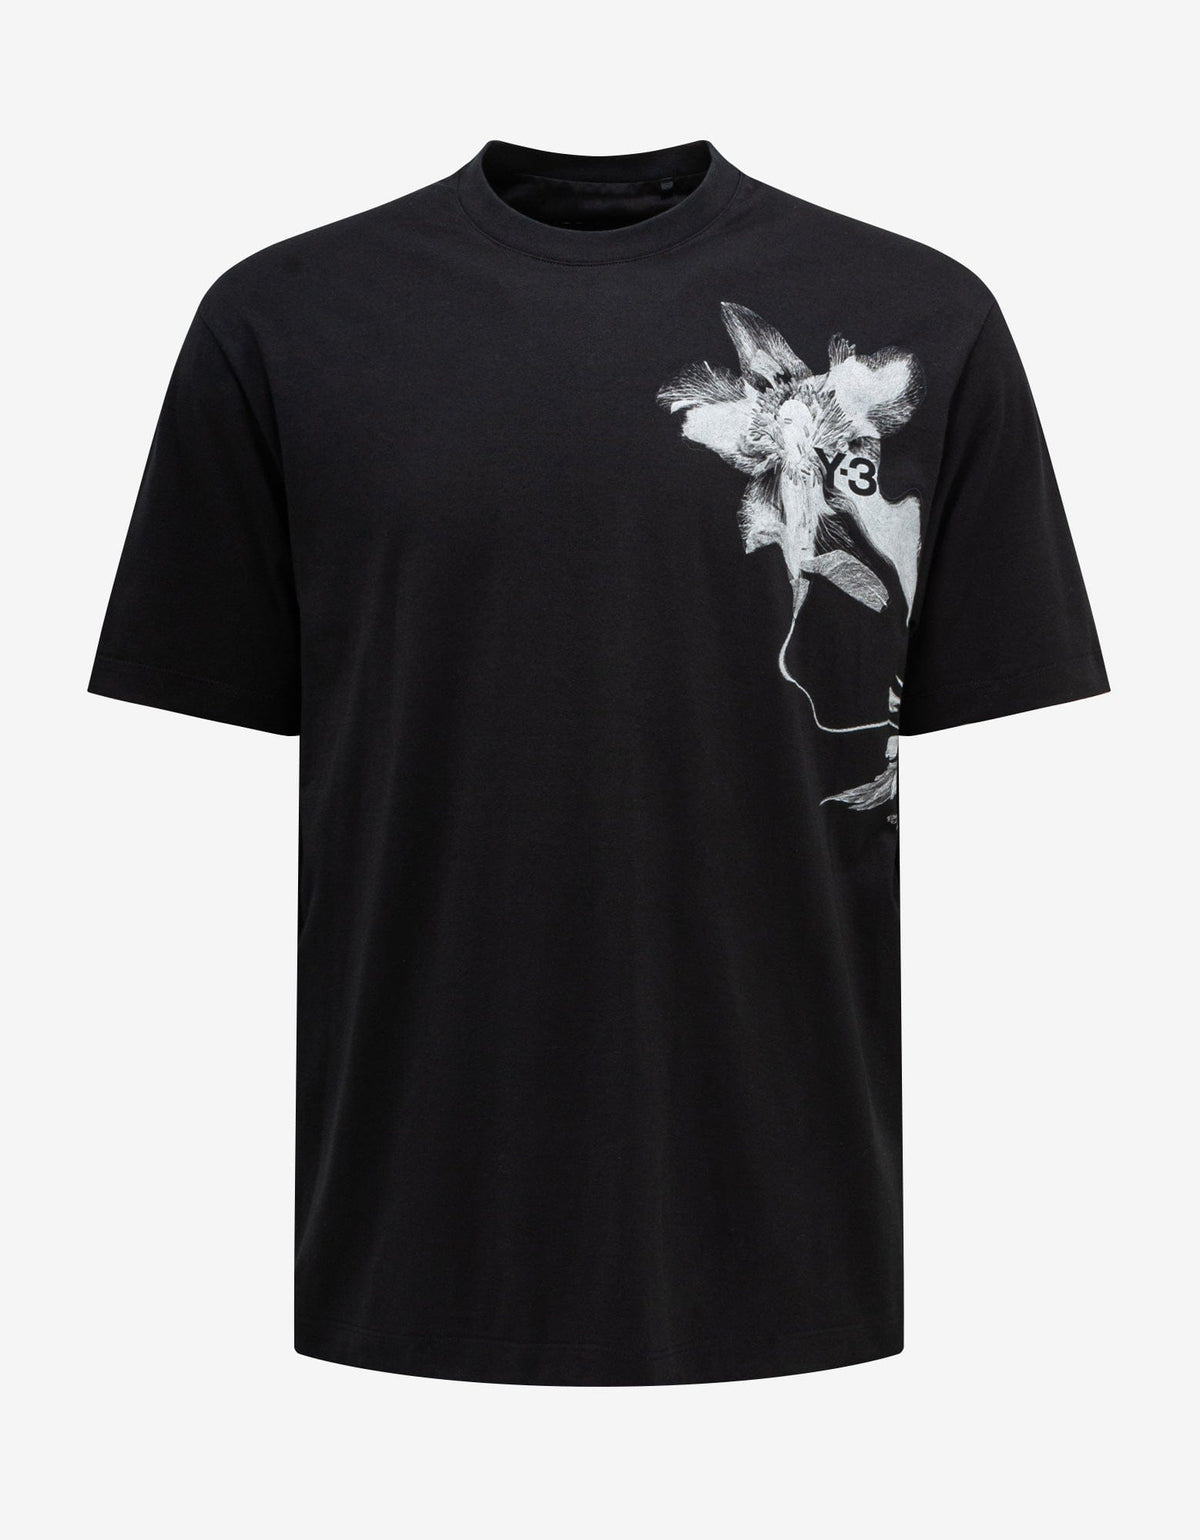 Y-3 Black Floral Print T-Shirt